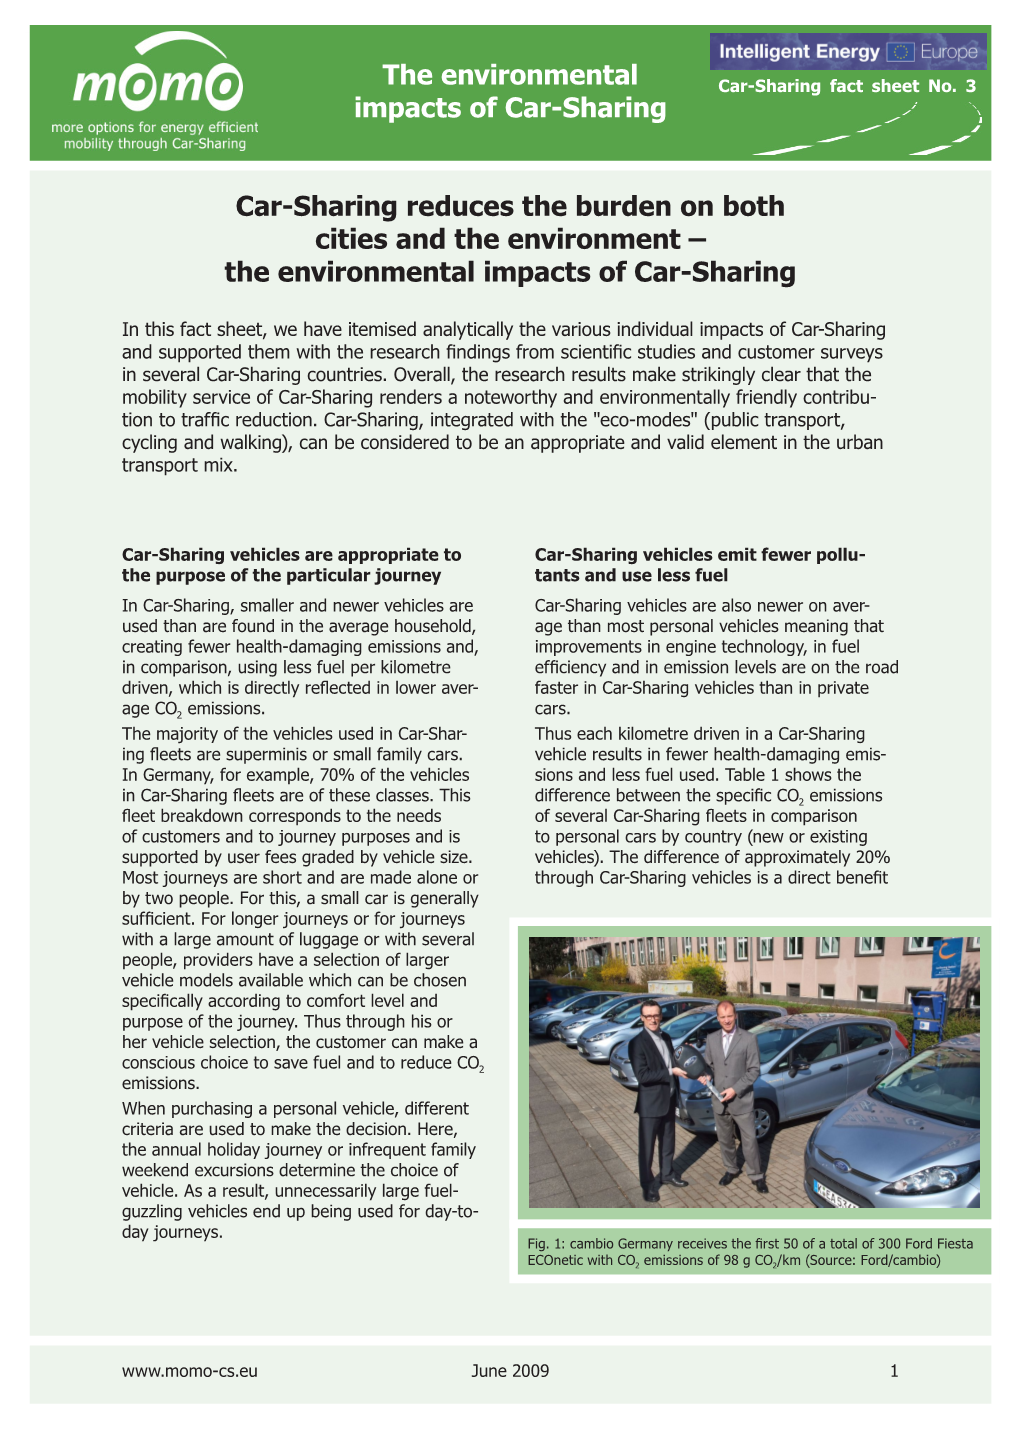 The Environmental Impacts of Car-Sharing